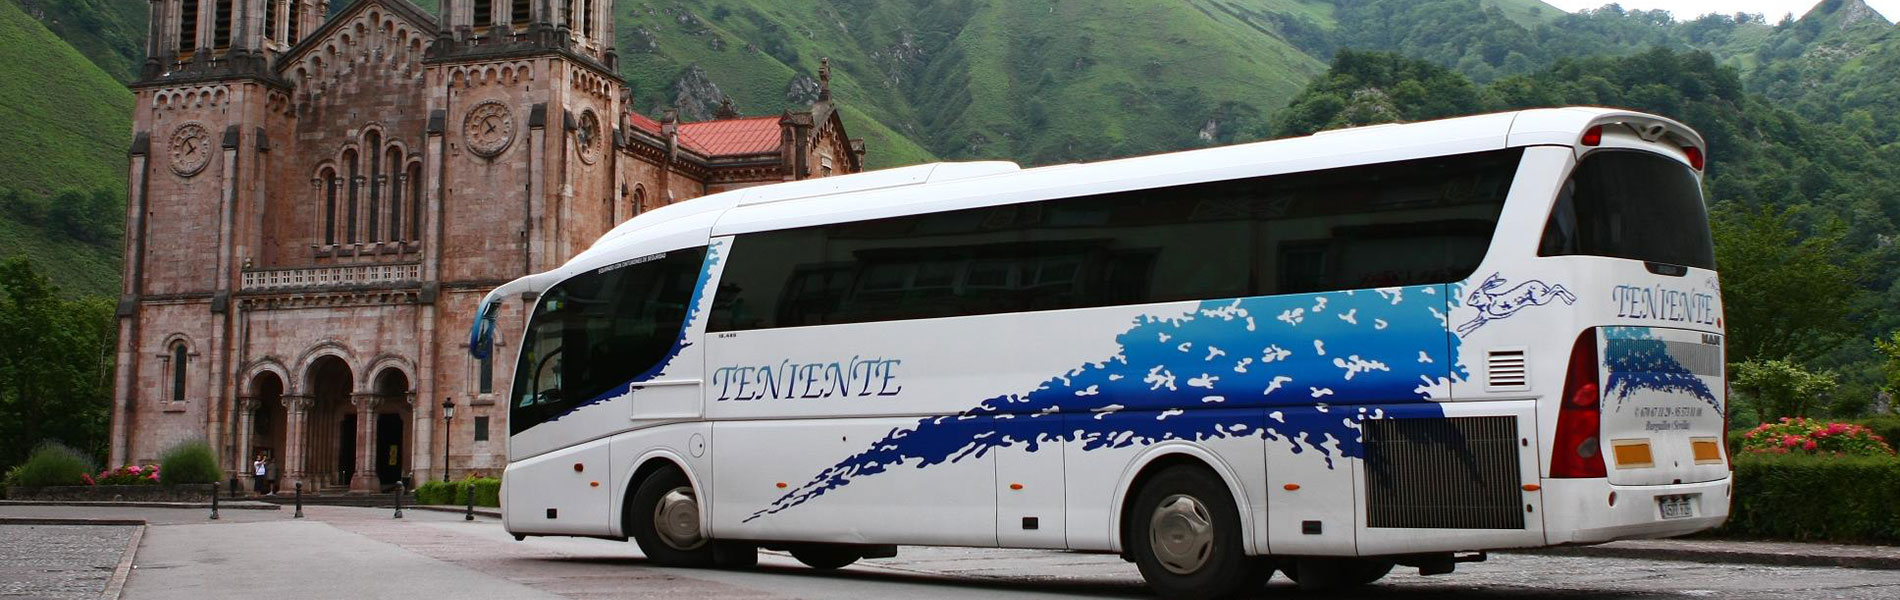 Autobus-Covadonga-1900x600